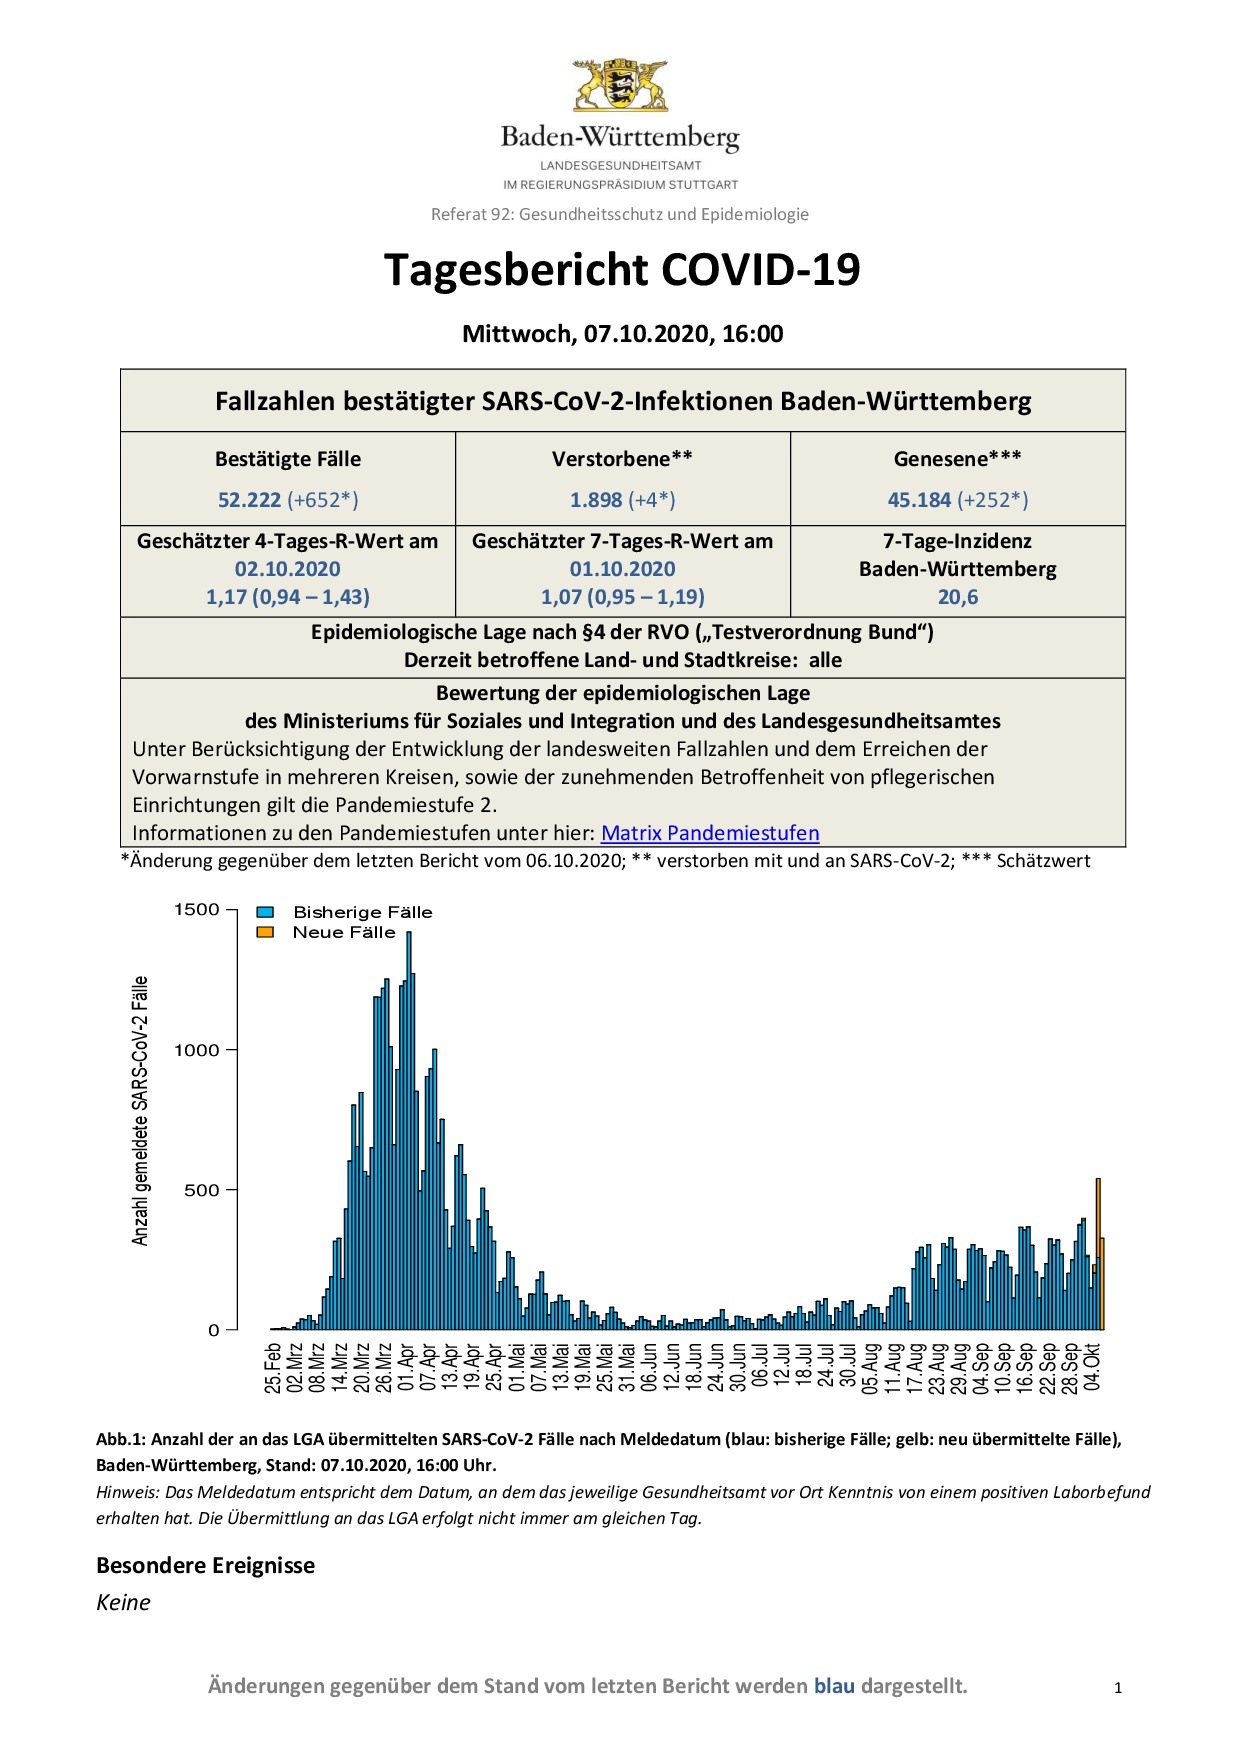 COVID-19 Tagesbericht (07.10.2020) des Landesgesundheitsamts Baden-Württemberg